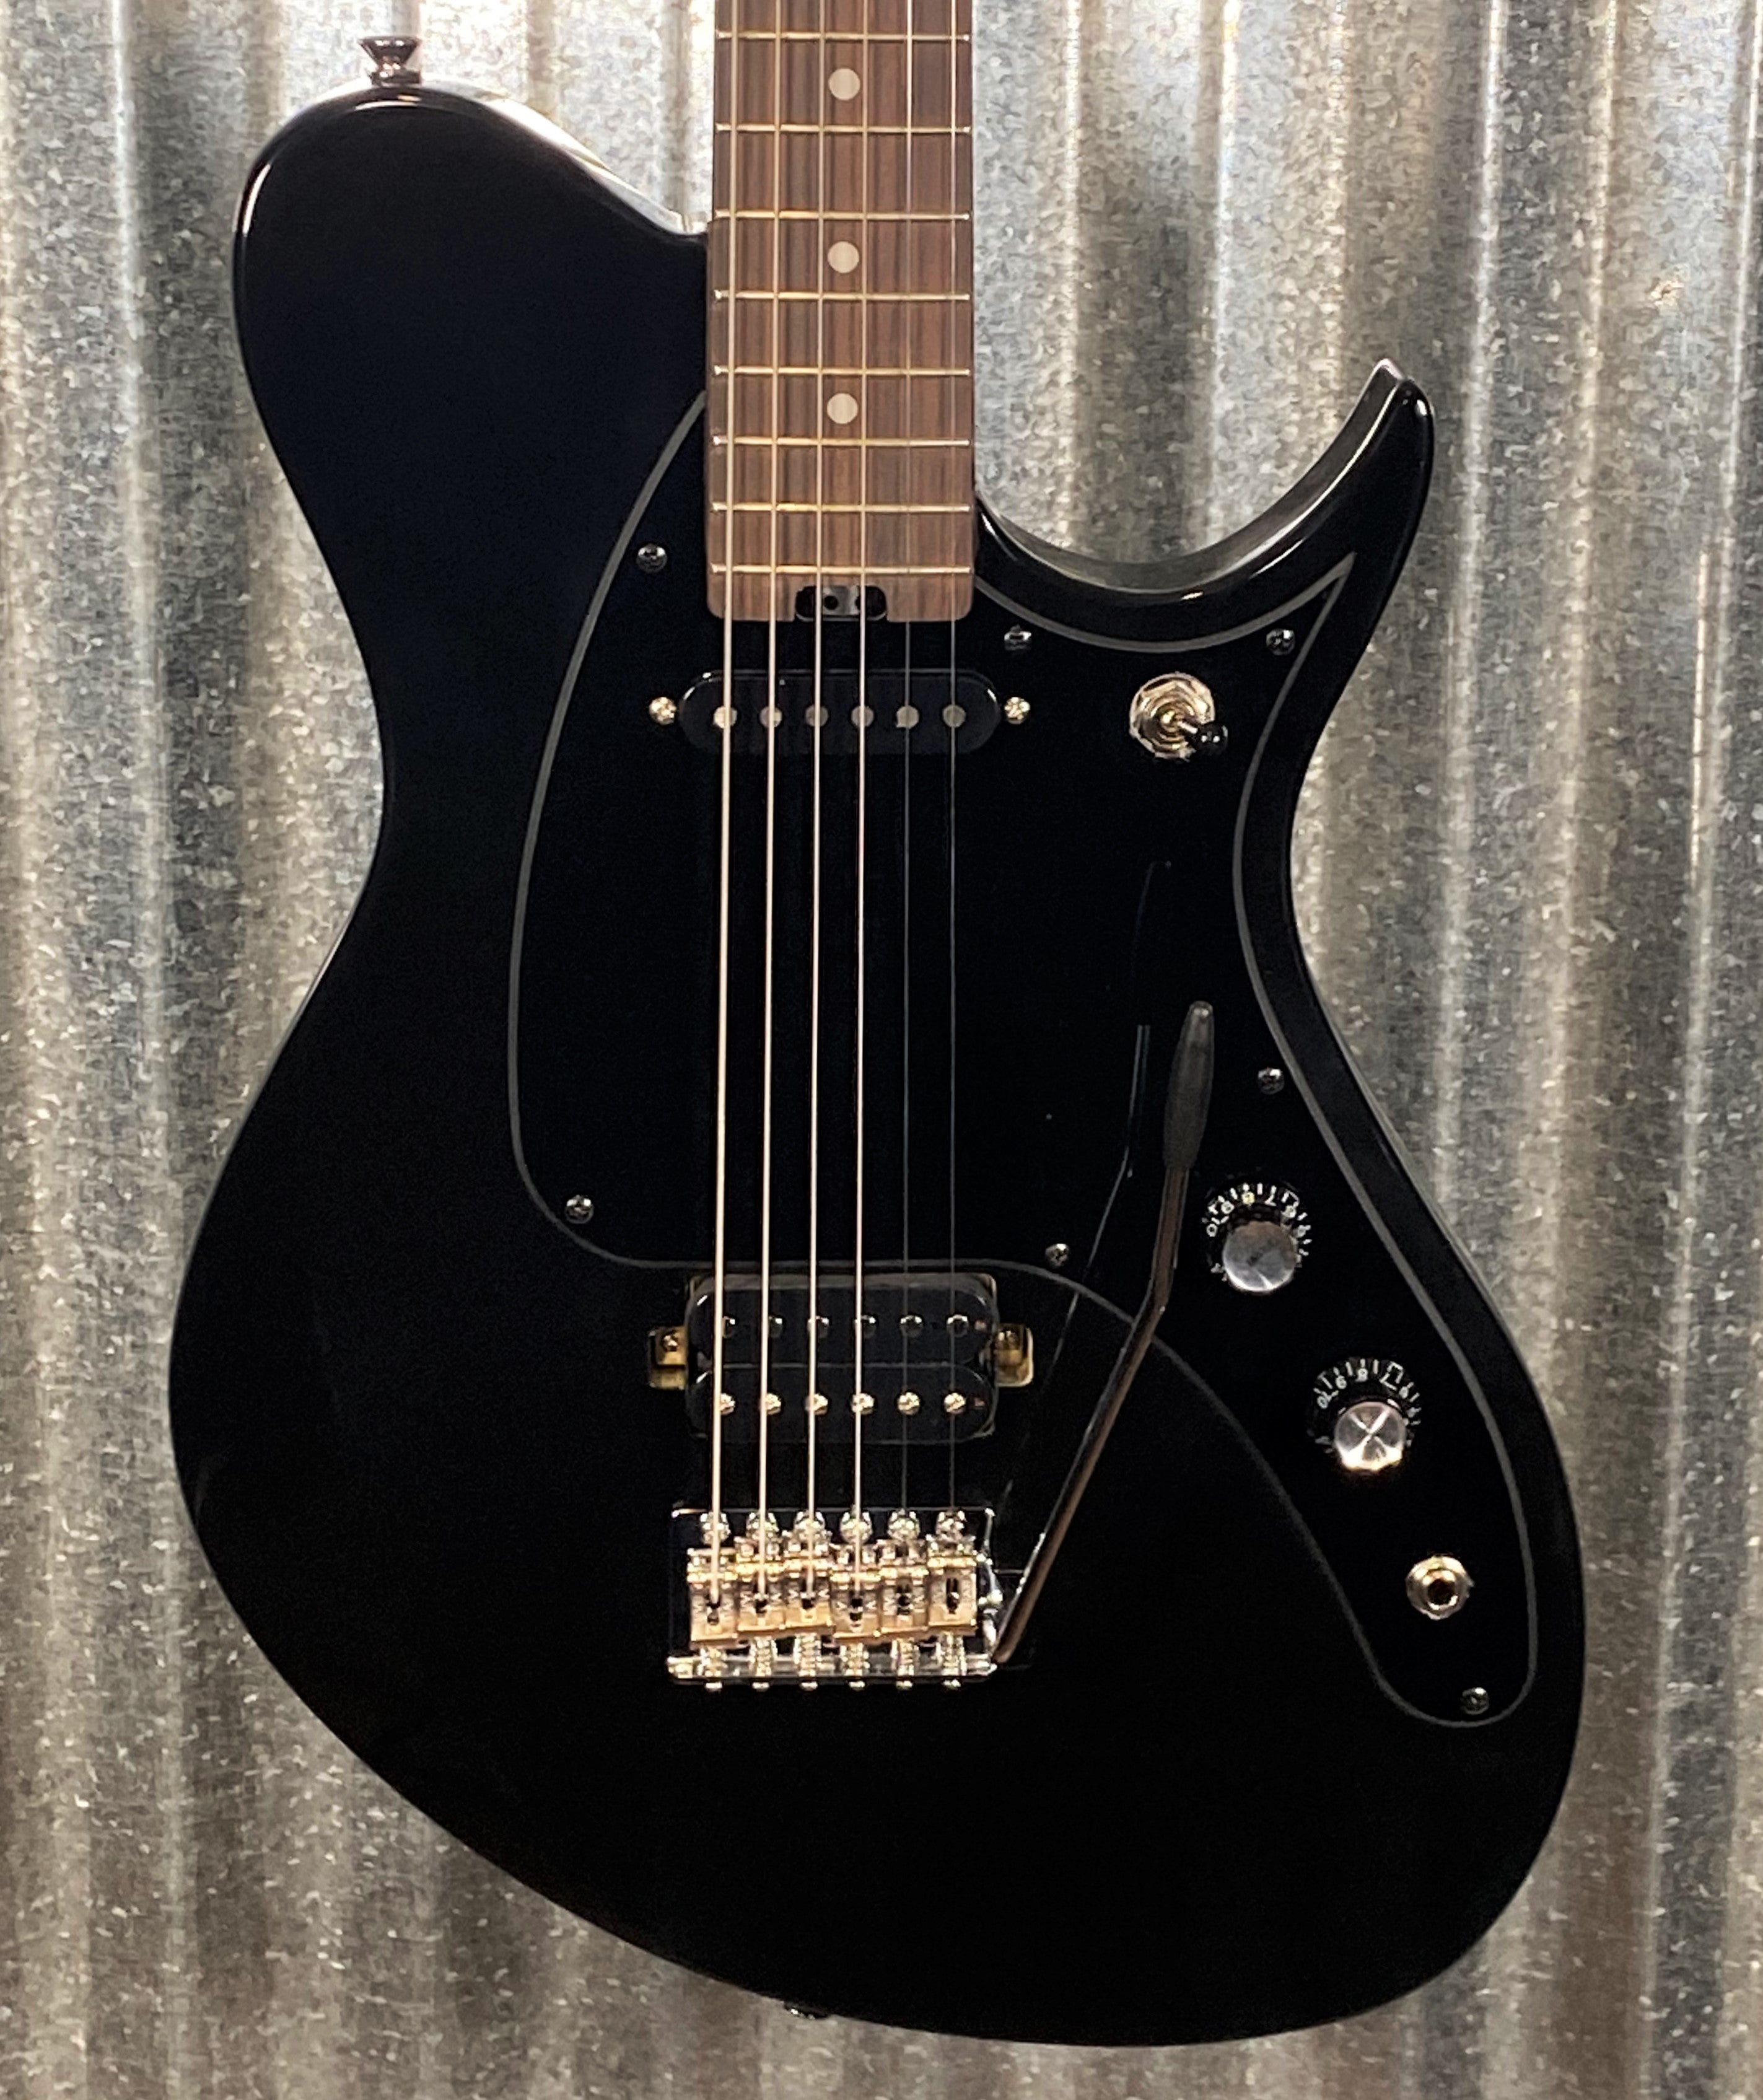 ARIA Pro II JET-BTONE-BK Baritone Guitar Black #9102 – Specialty